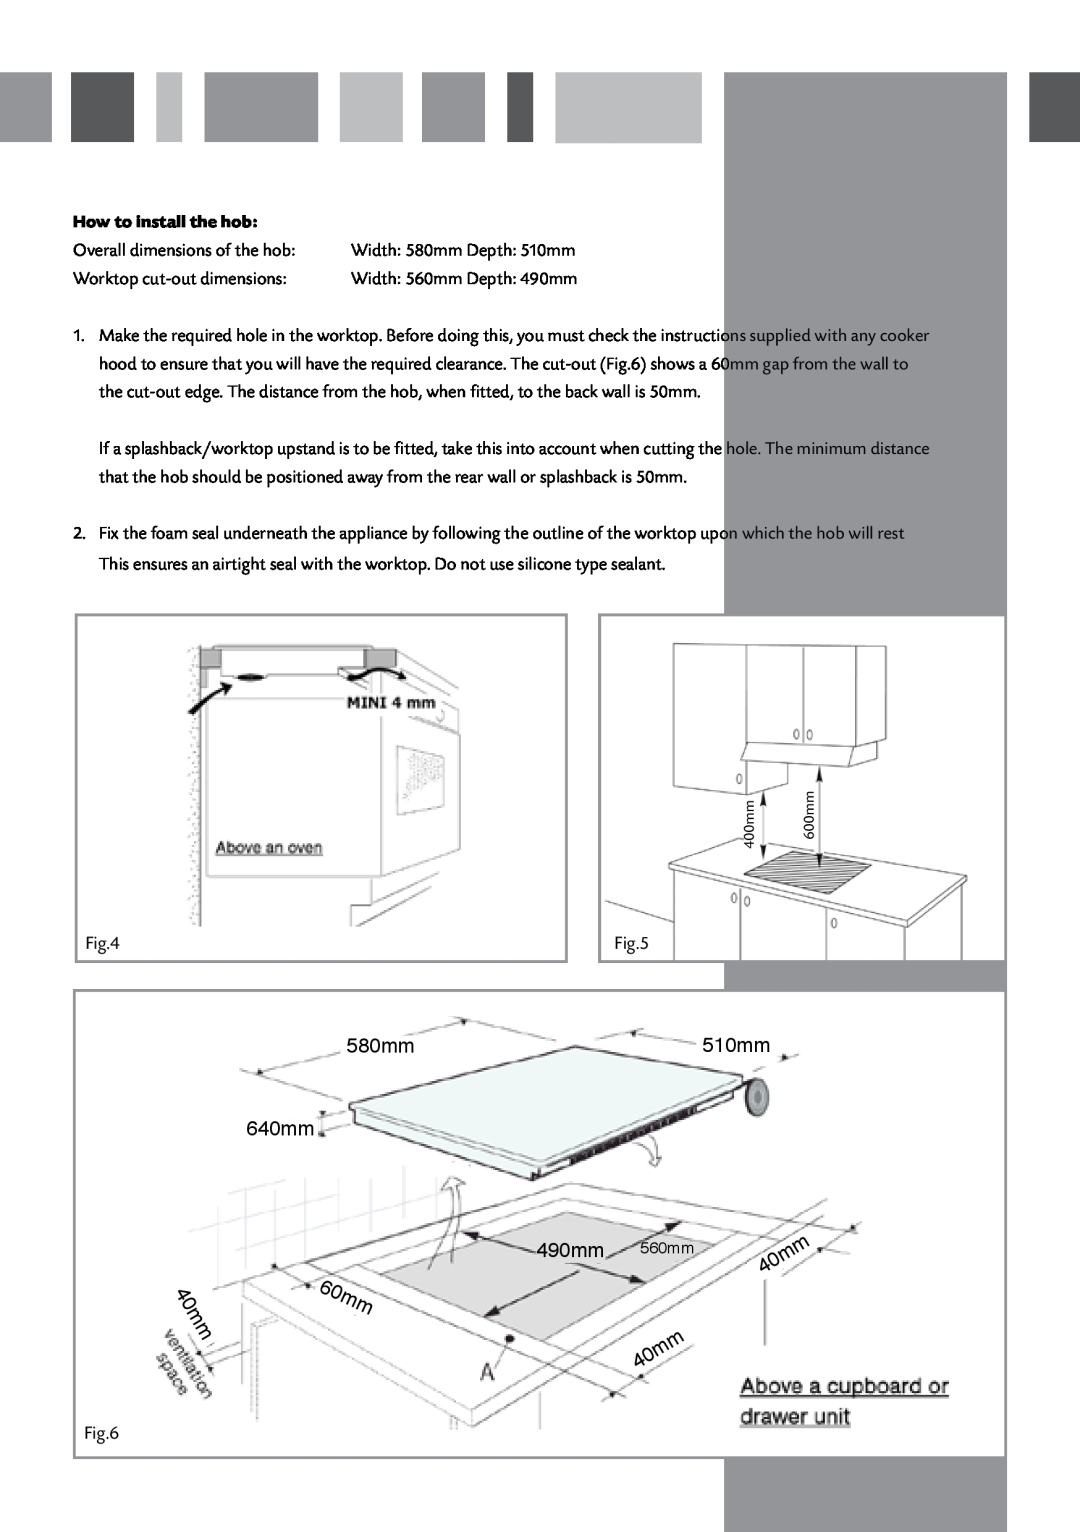 CDA HCN610 manual How to install the hob, 580mm 640mm, 510mm, 490mm 